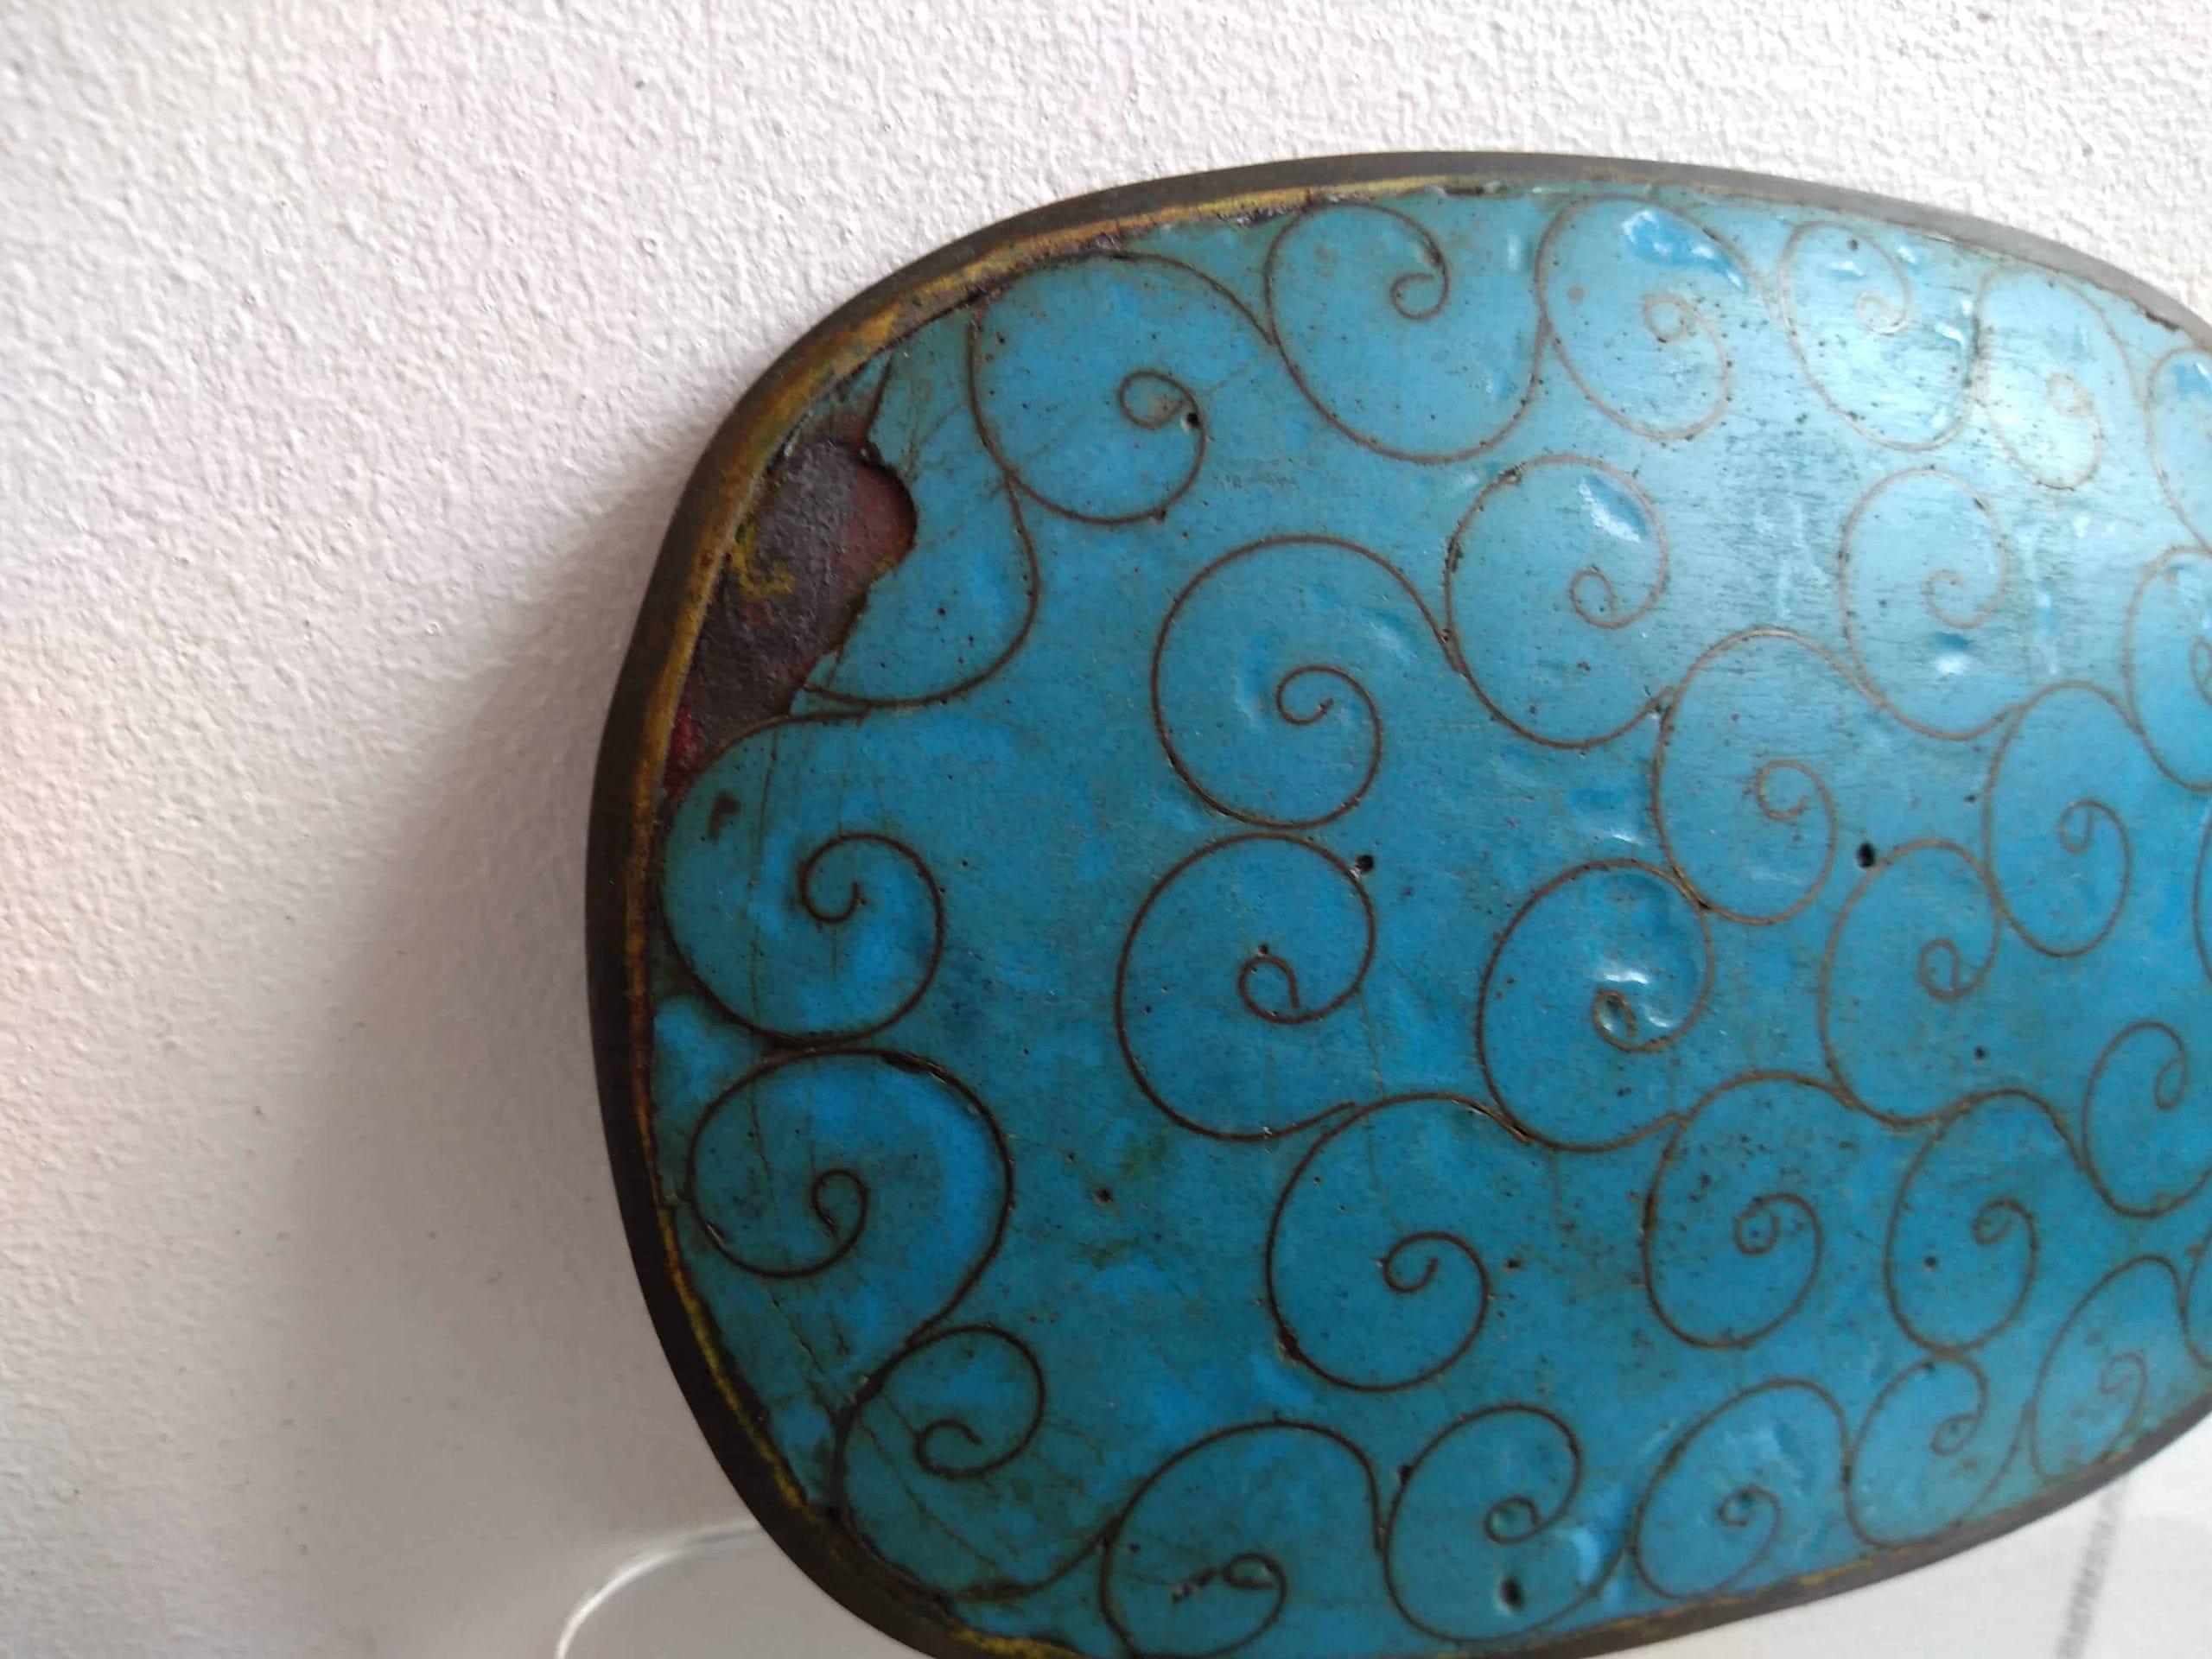 Chinese Cloisonne Vintage Inlaid Blue Enamel Bowl #45563